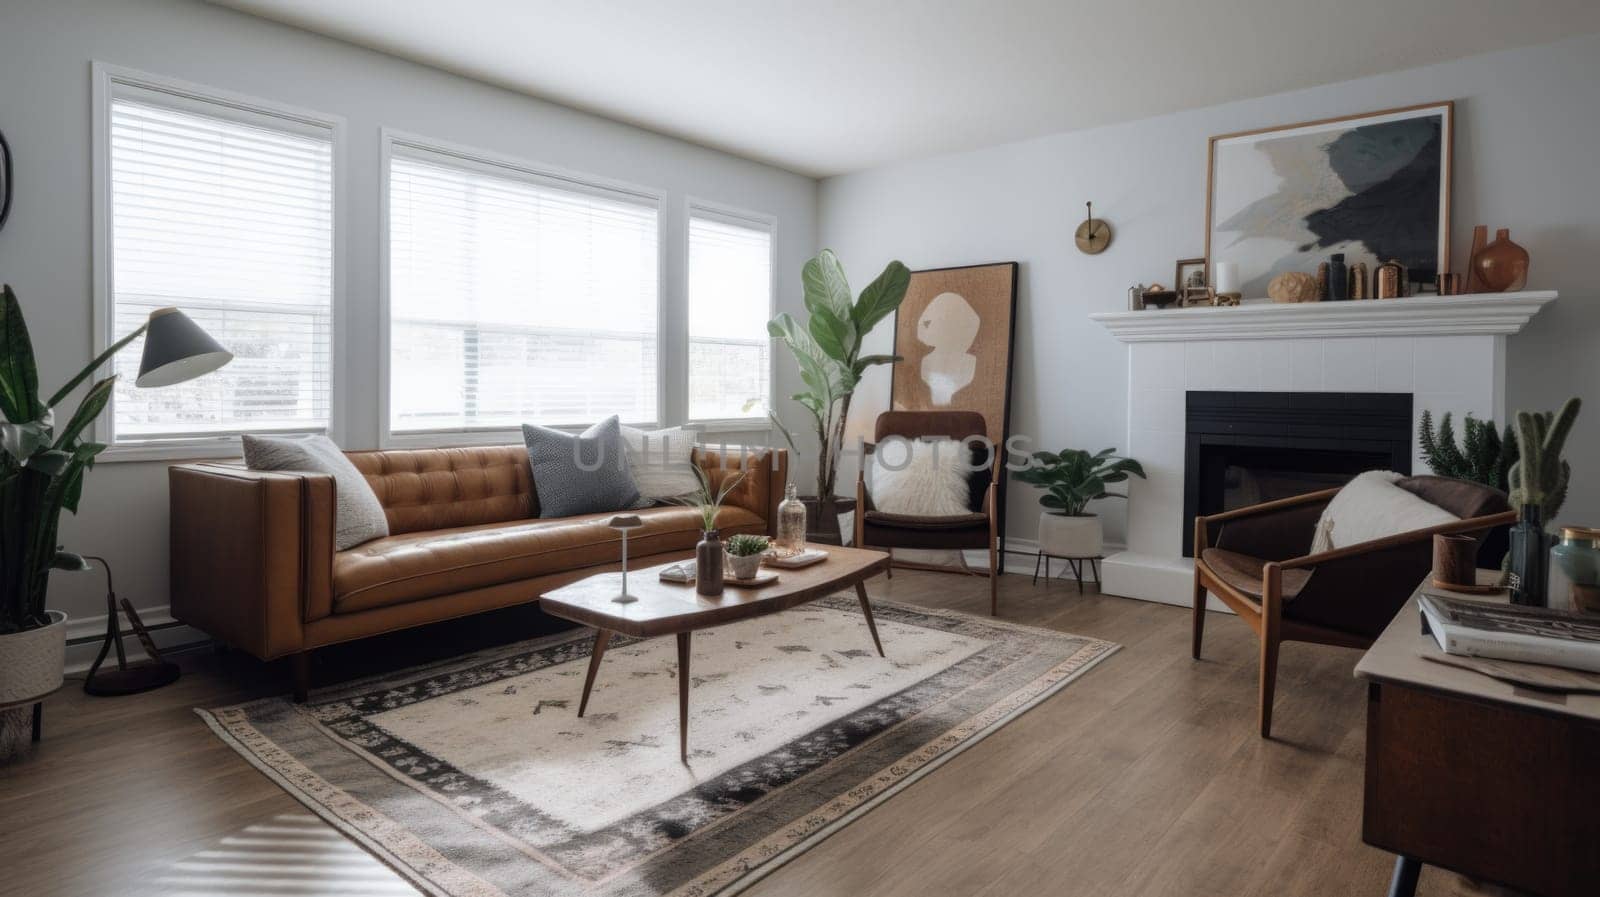 Living room decor, home interior design . Mid-century modern Scandinavian style by biancoblue